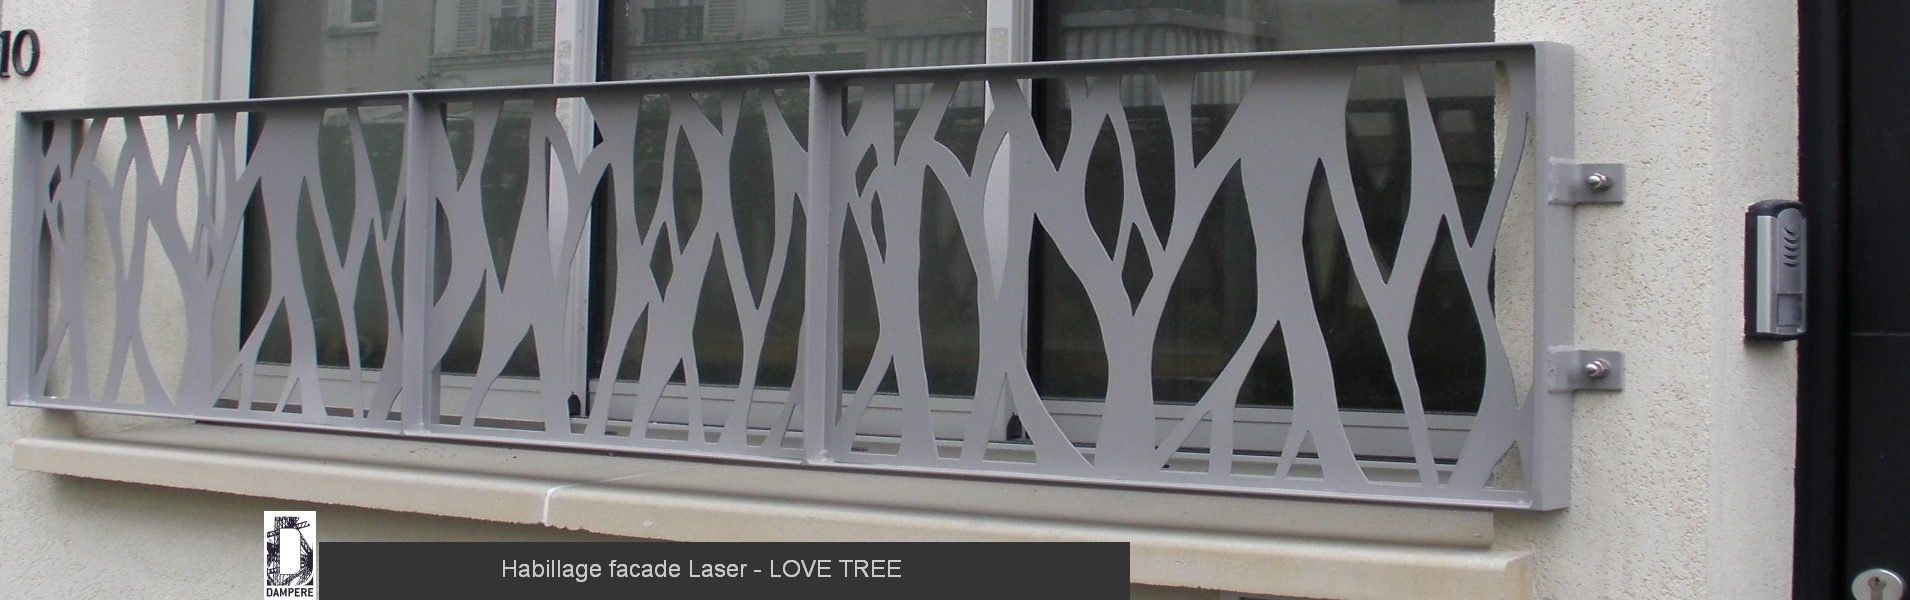 Habillage facade Laser LOVE TREE 8